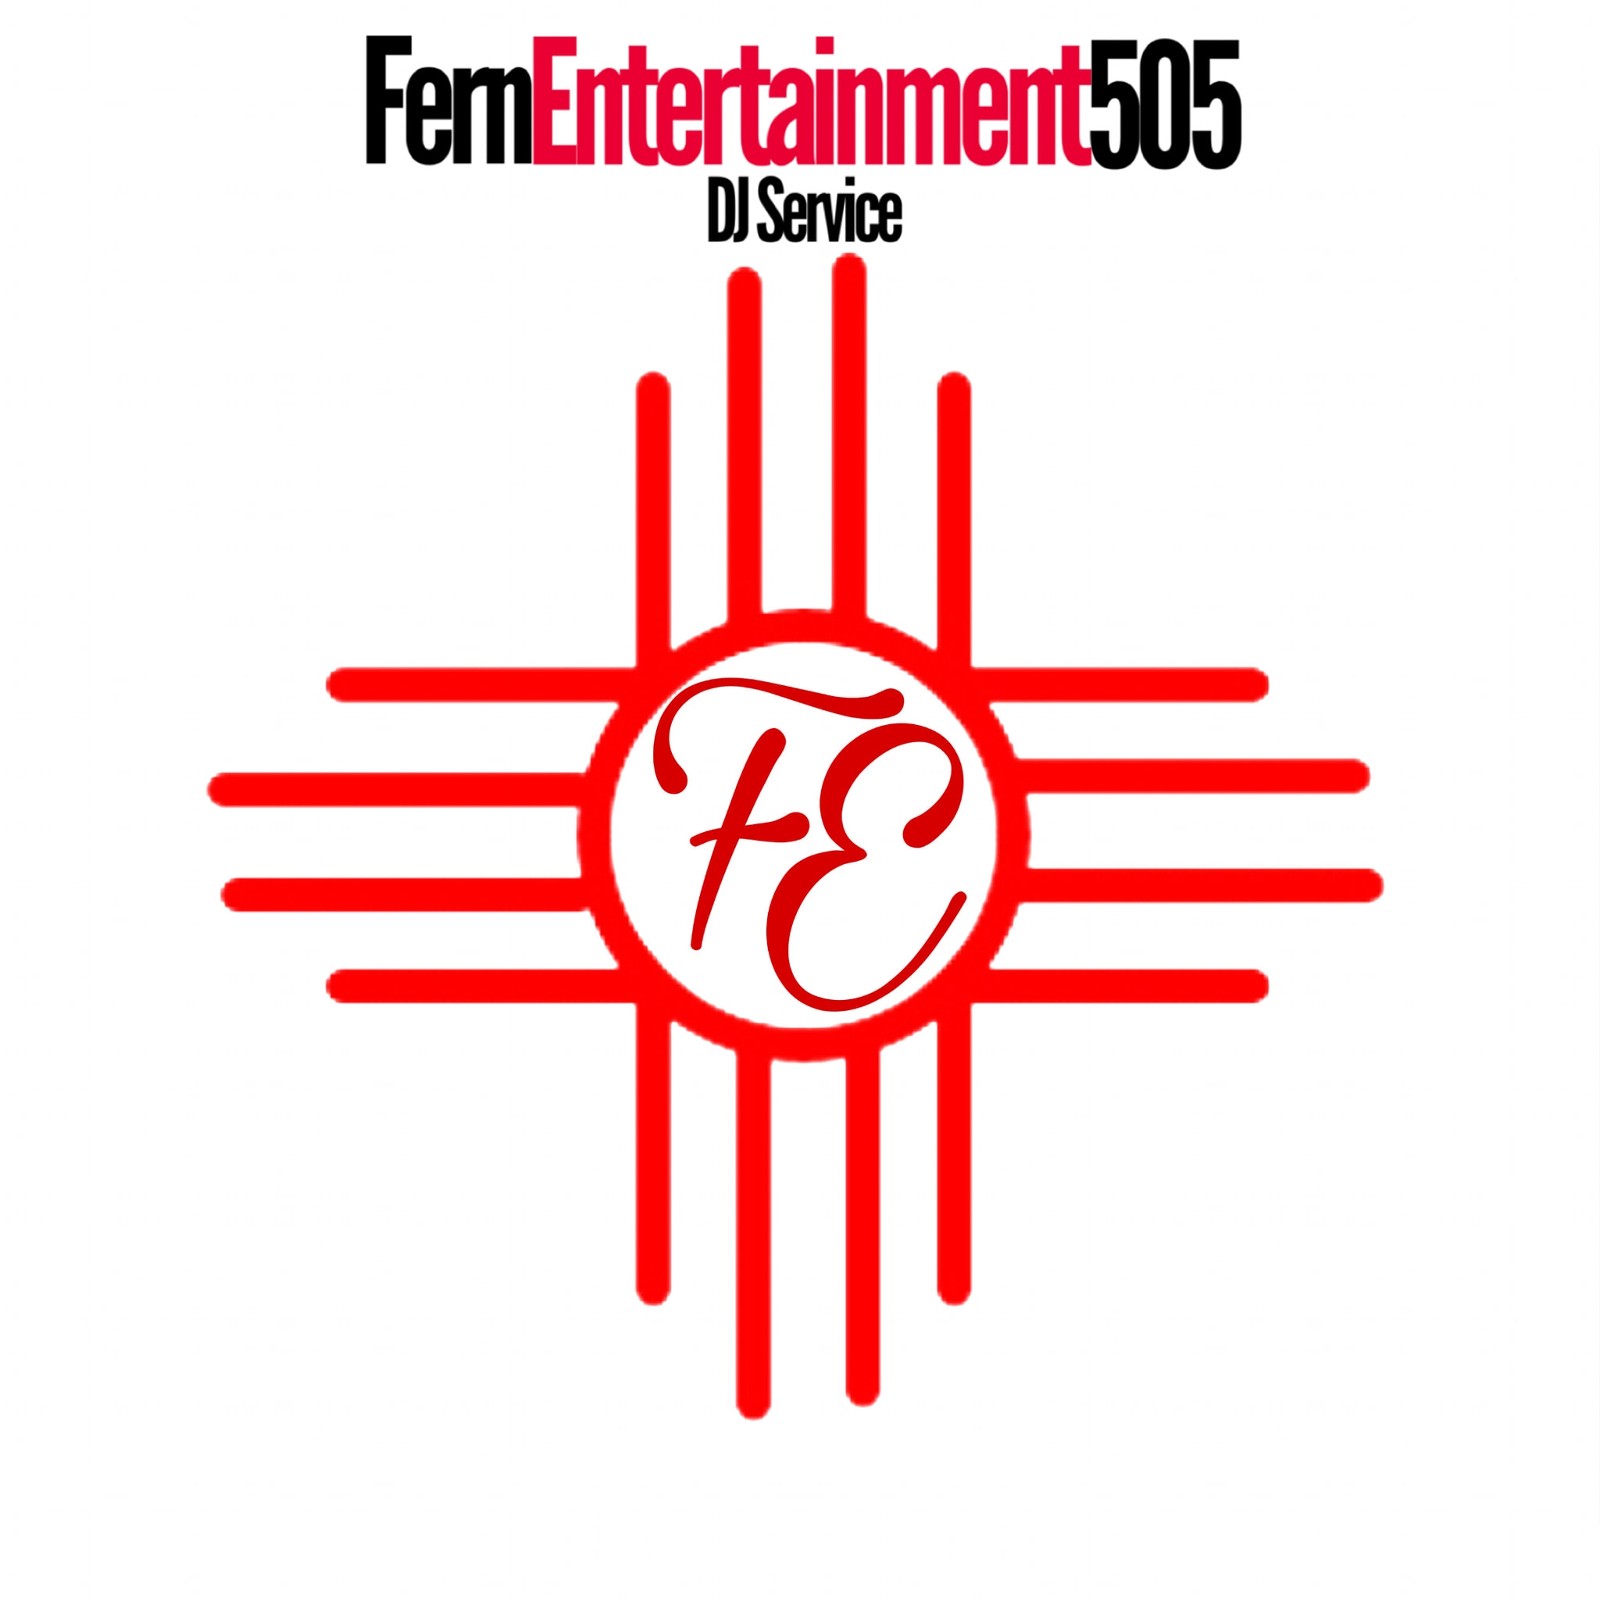 Fern Entertainment 505 logo